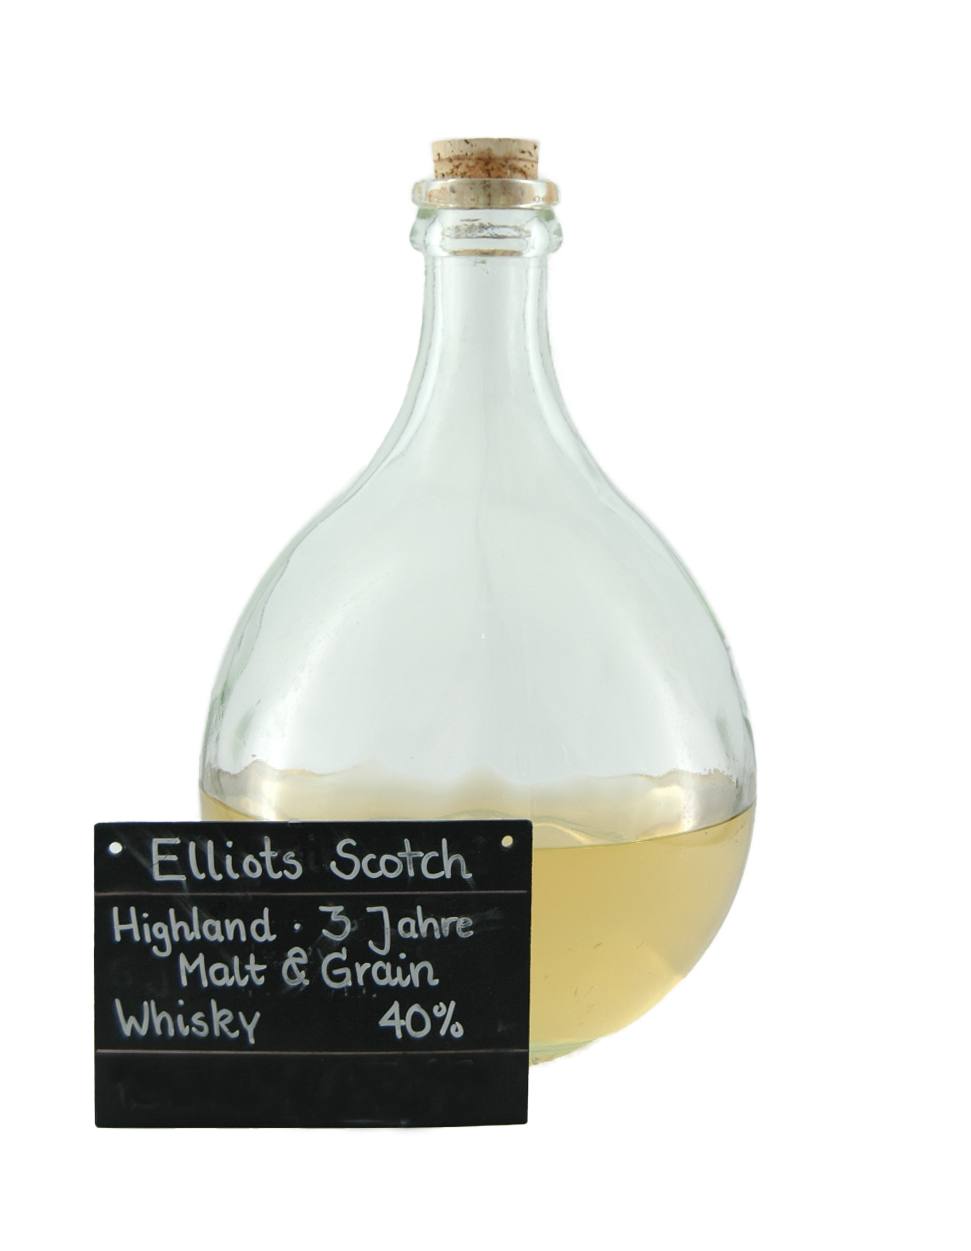 Elliots Scotch Whisky Malt & Grain 3 Jahre - 350ml